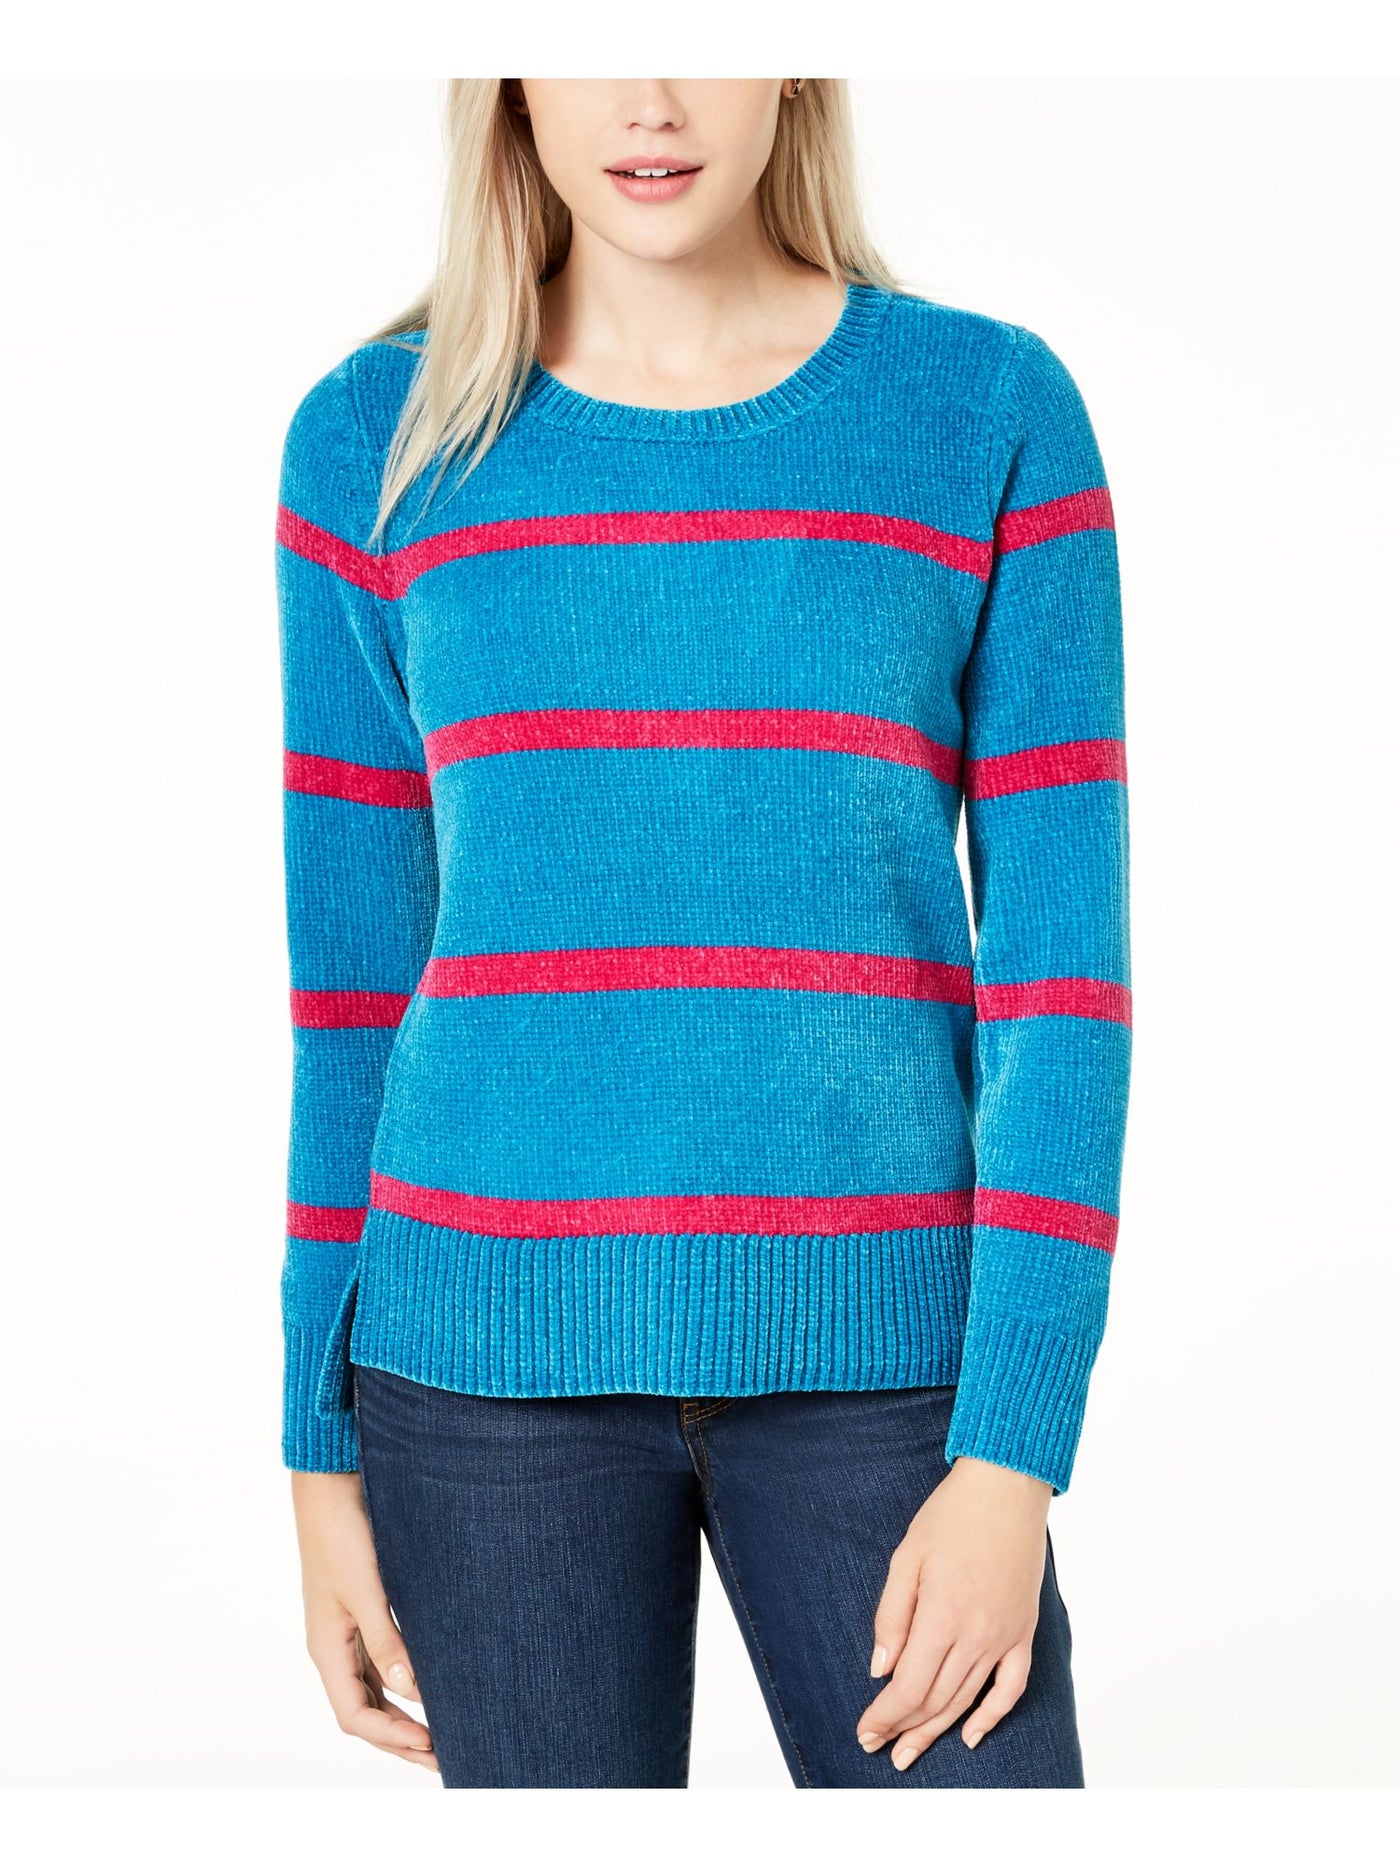 MAISON JULES Womens Teal Striped Long Sleeve Jewel Neck Sweater XS